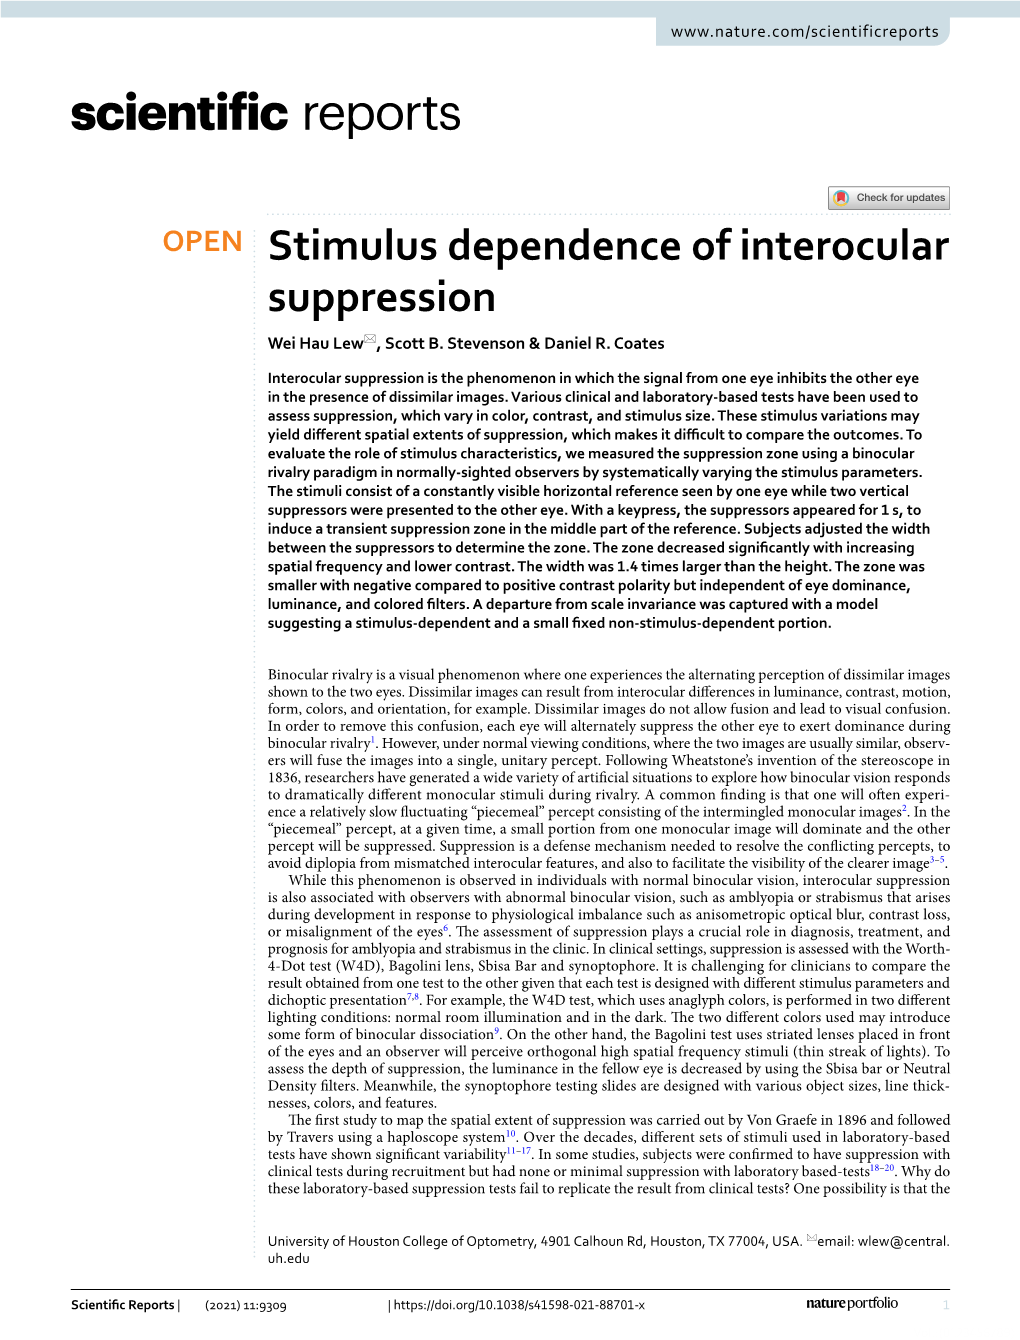 Stimulus Dependence of Interocular Suppression Wei Hau Lew*, Scott B